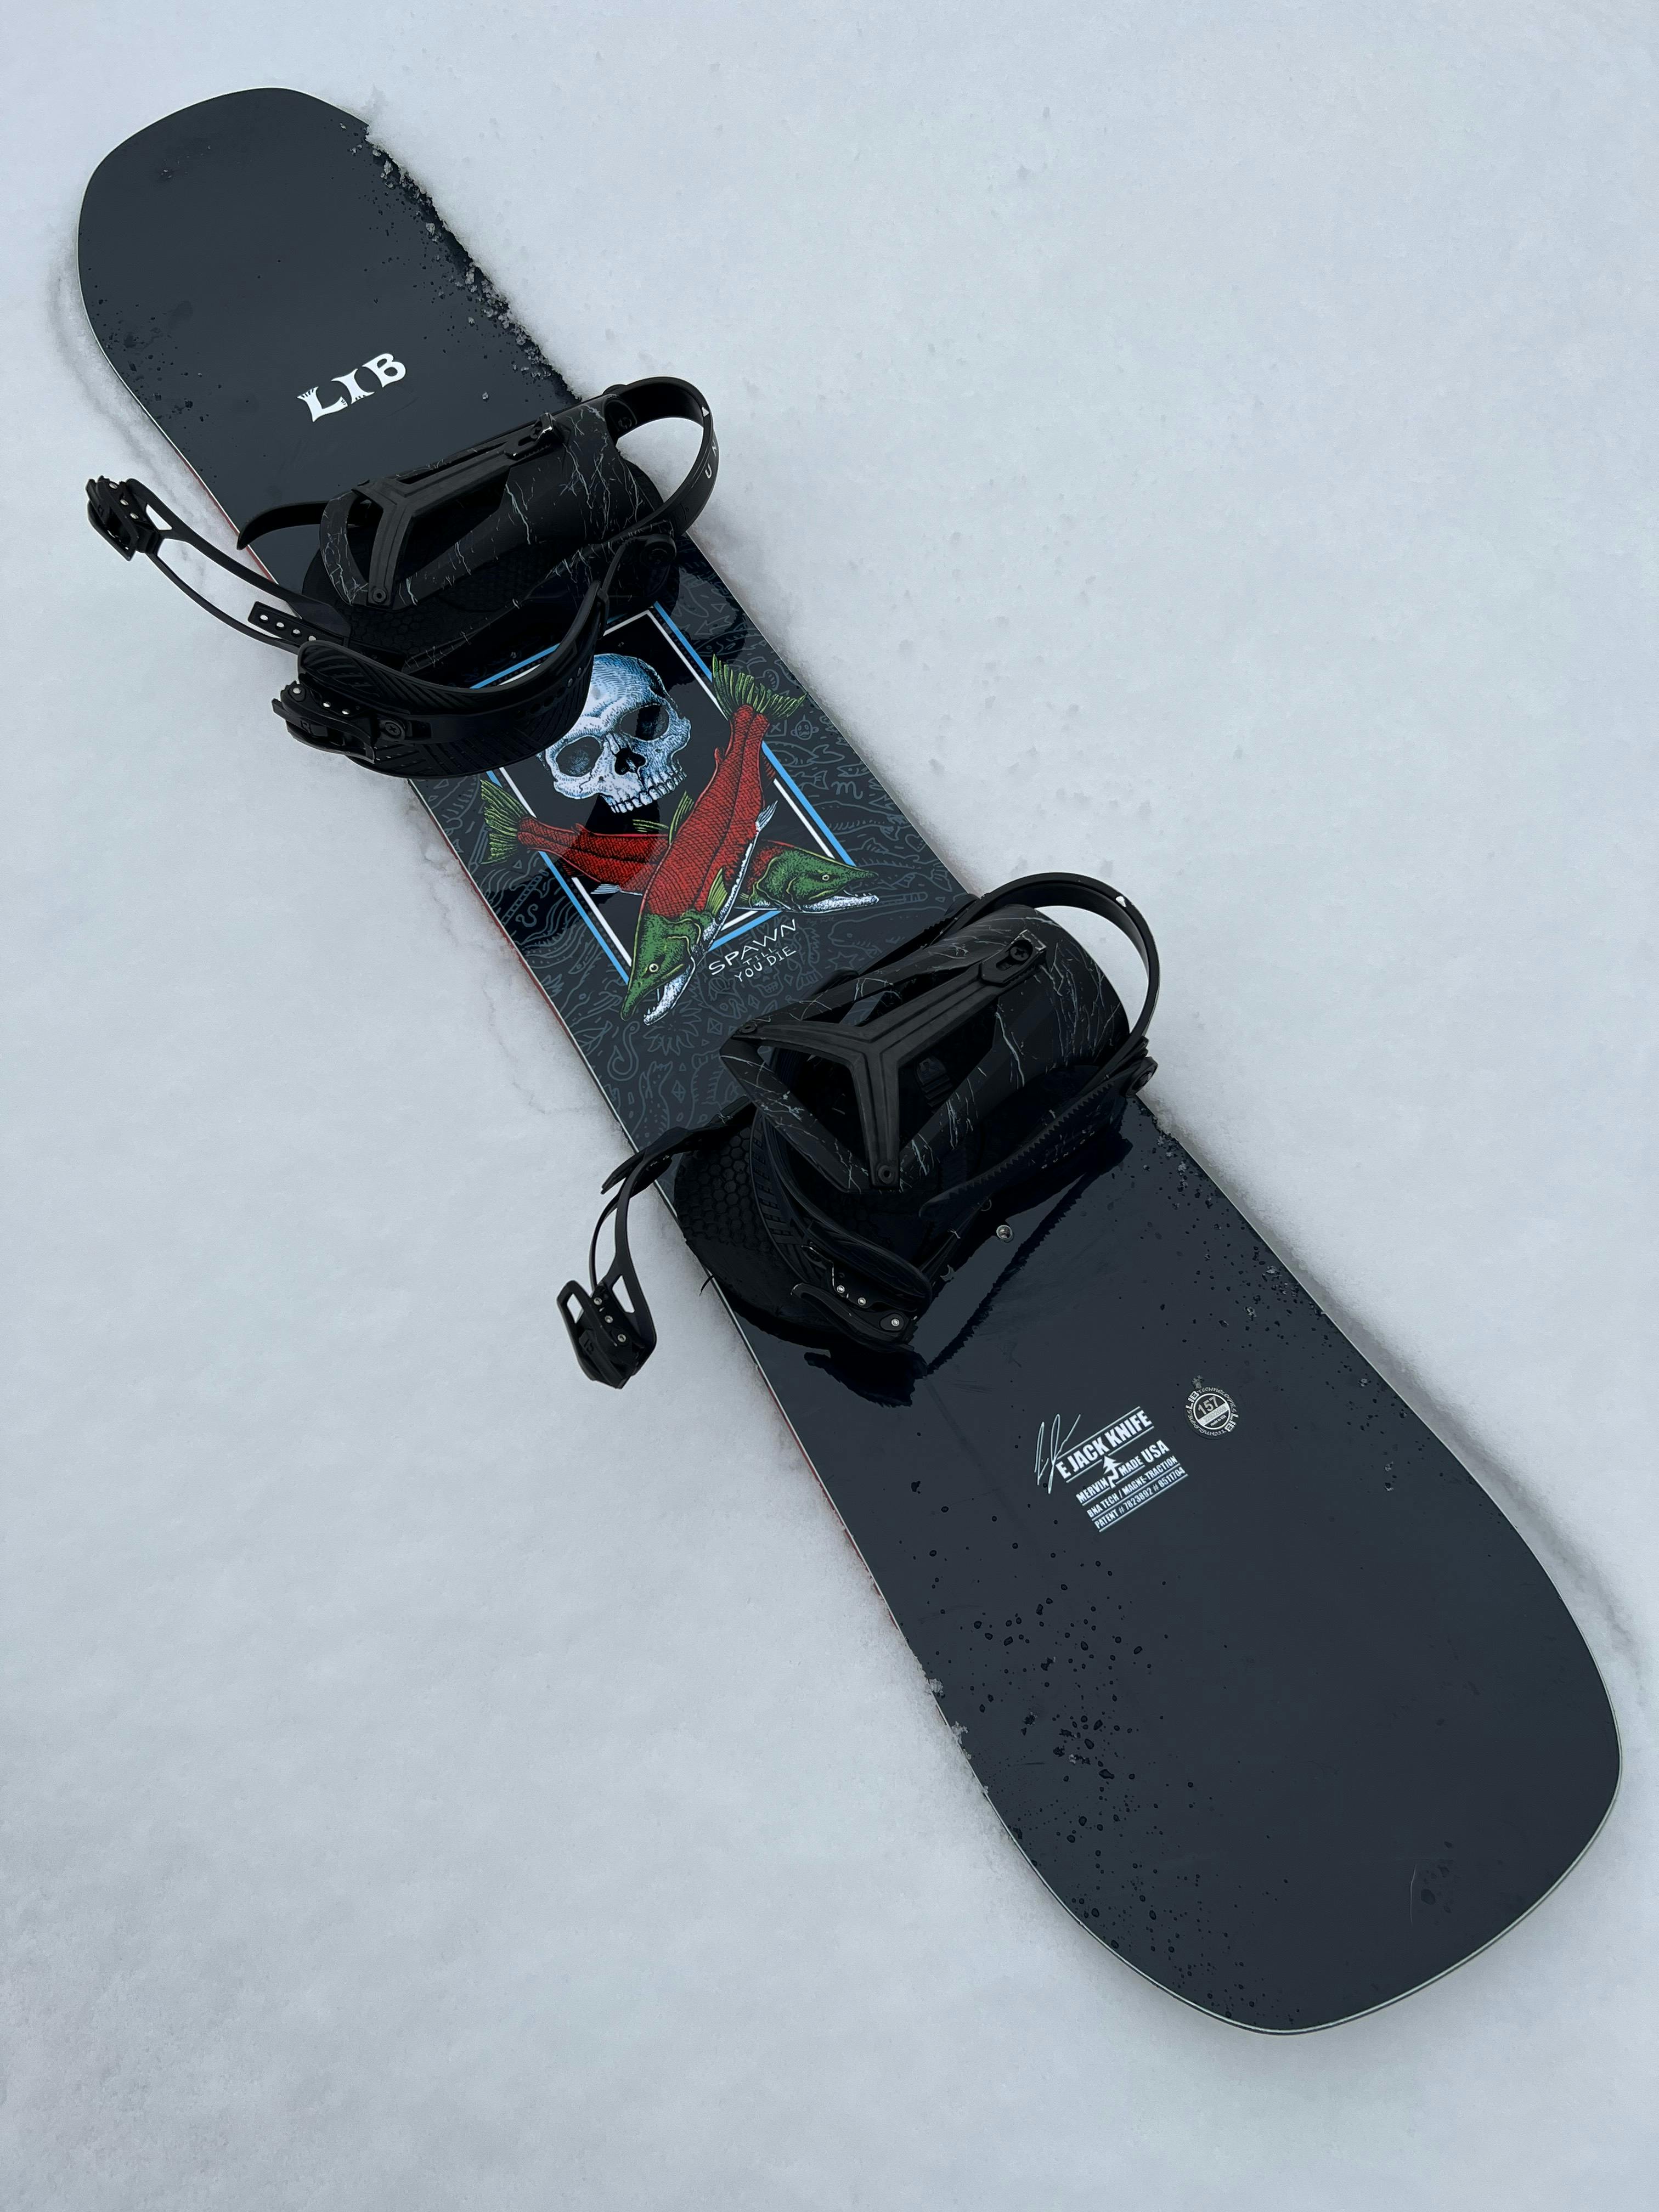 Expert Review: Lib Tech Ejack Knife Snowboard | Curated.com